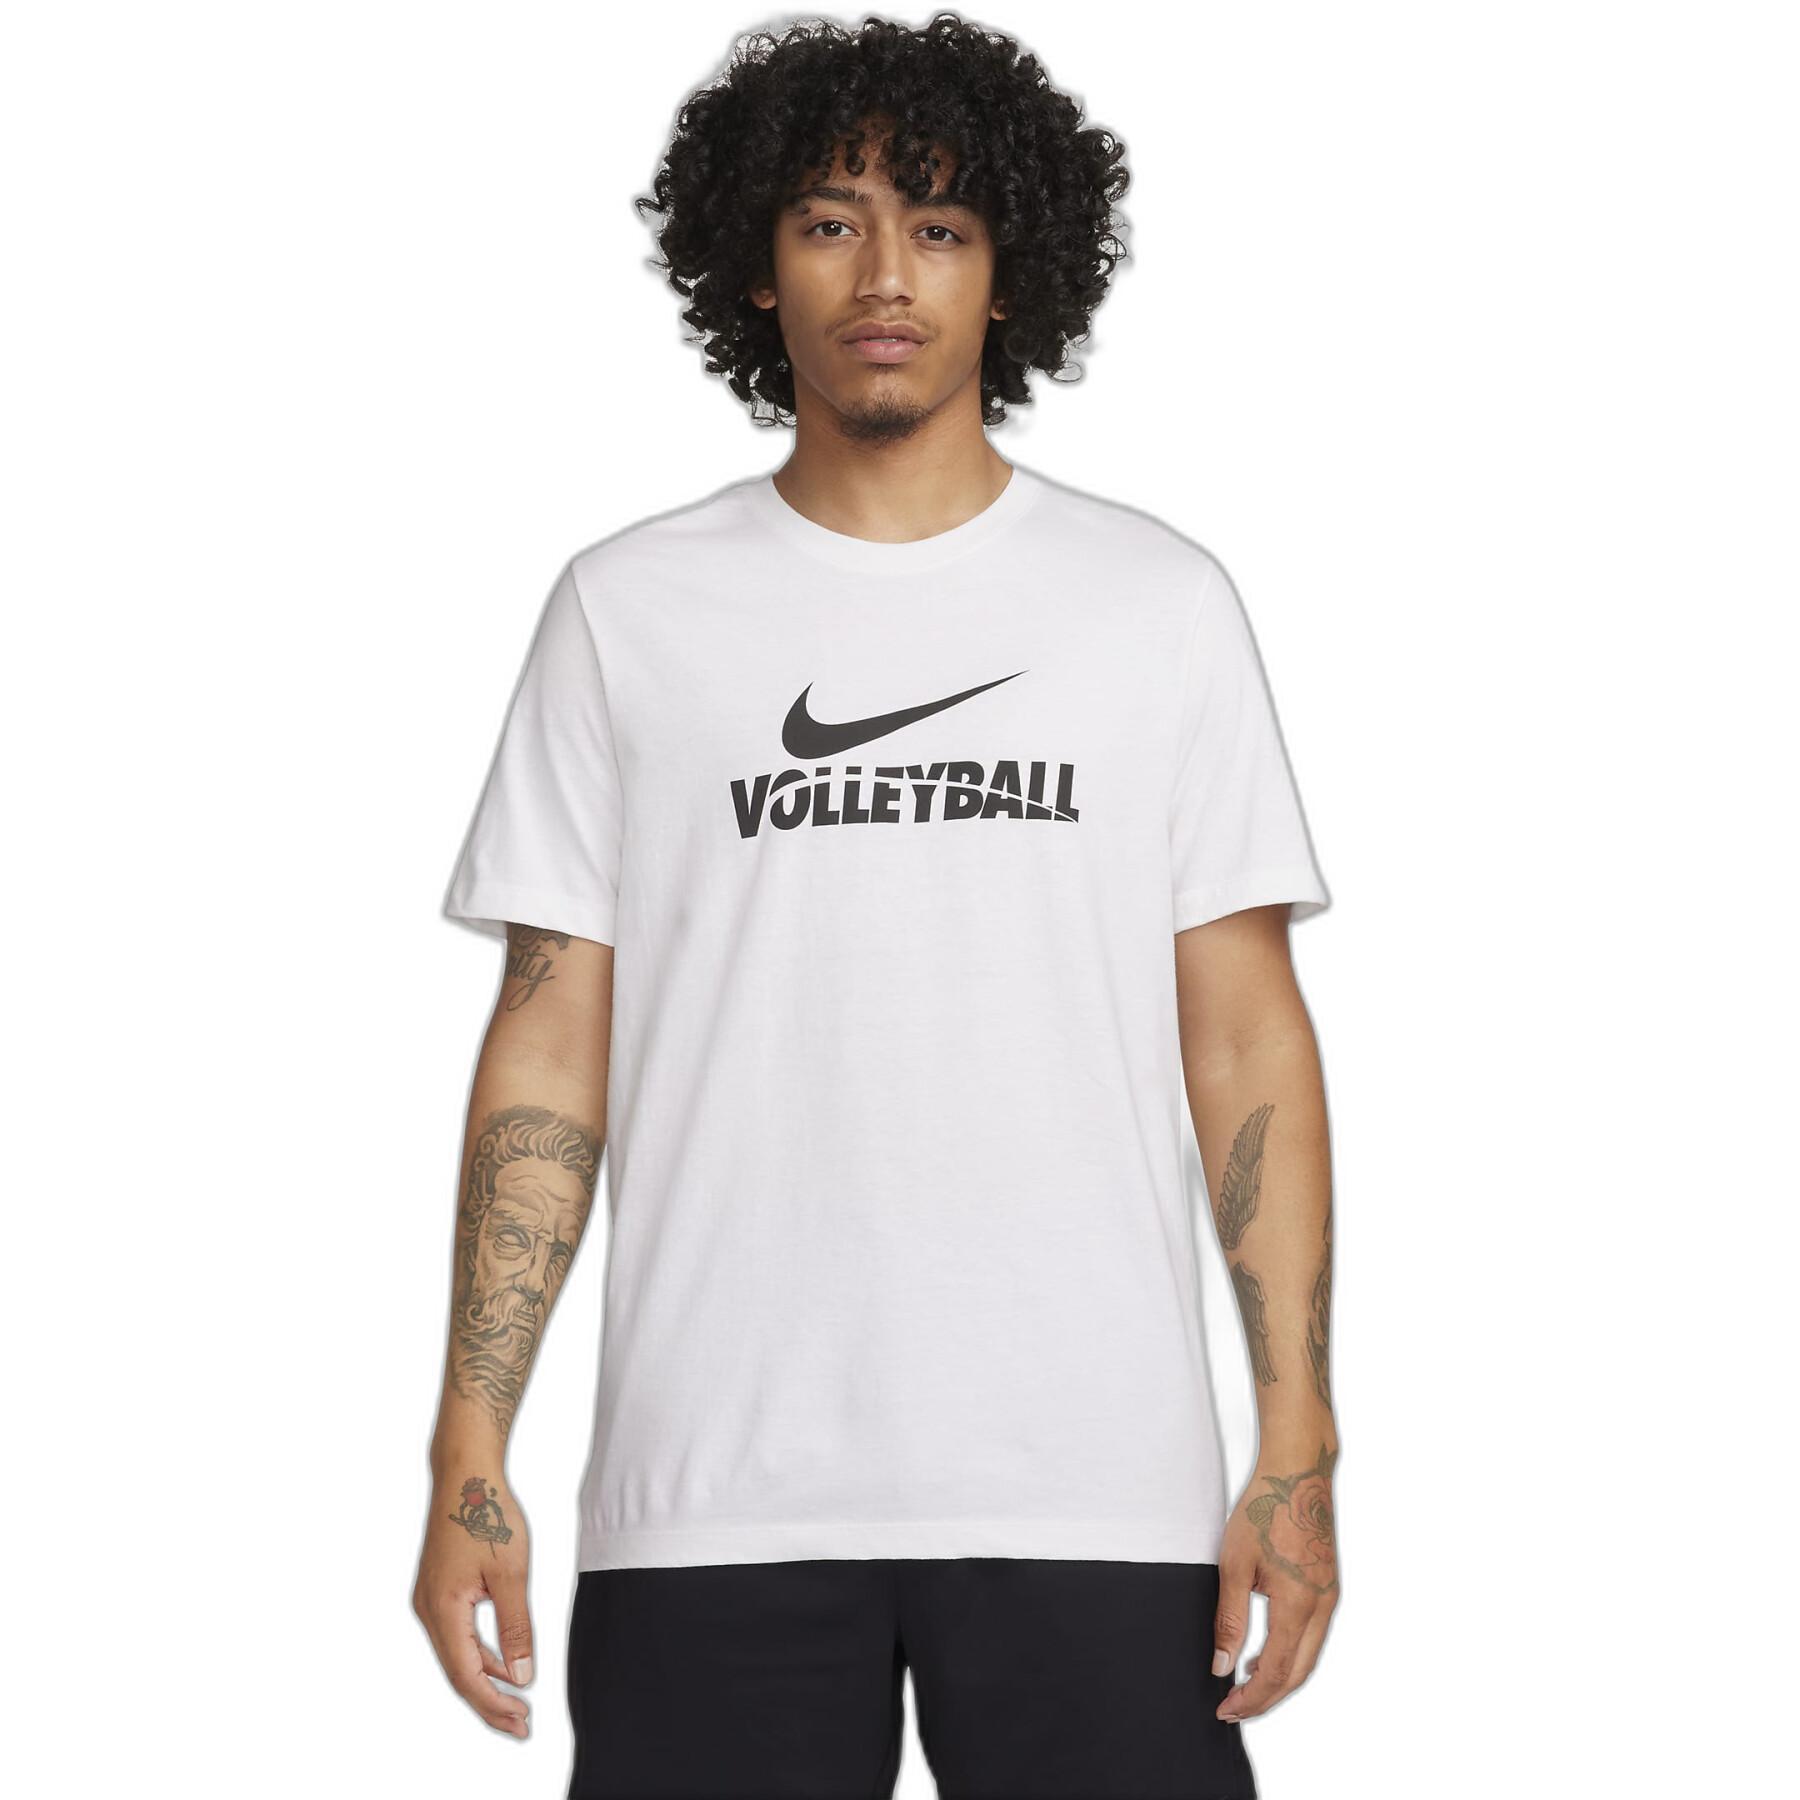 Women's T-shirt Nike Volleyball WM